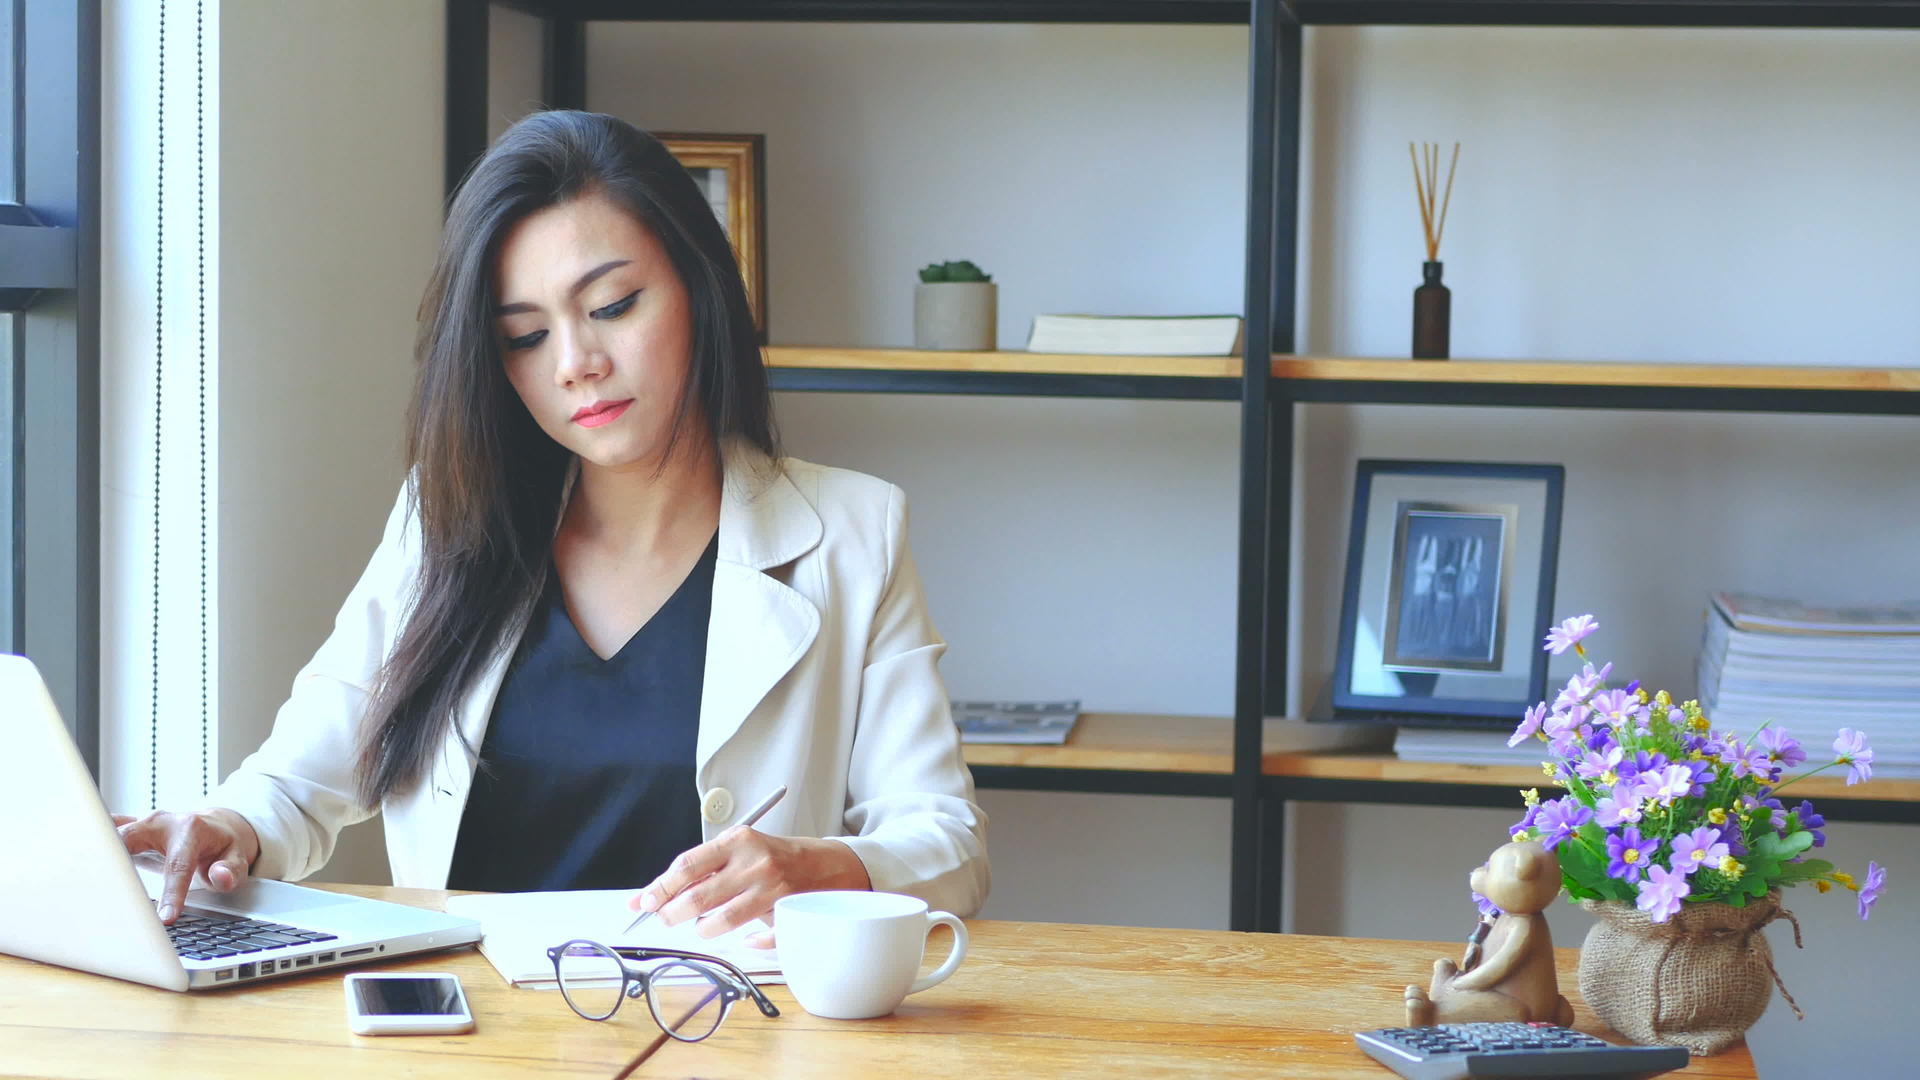 4k忙碌的商业女性在工作空间用笔记本电脑写字和写字视频的预览图